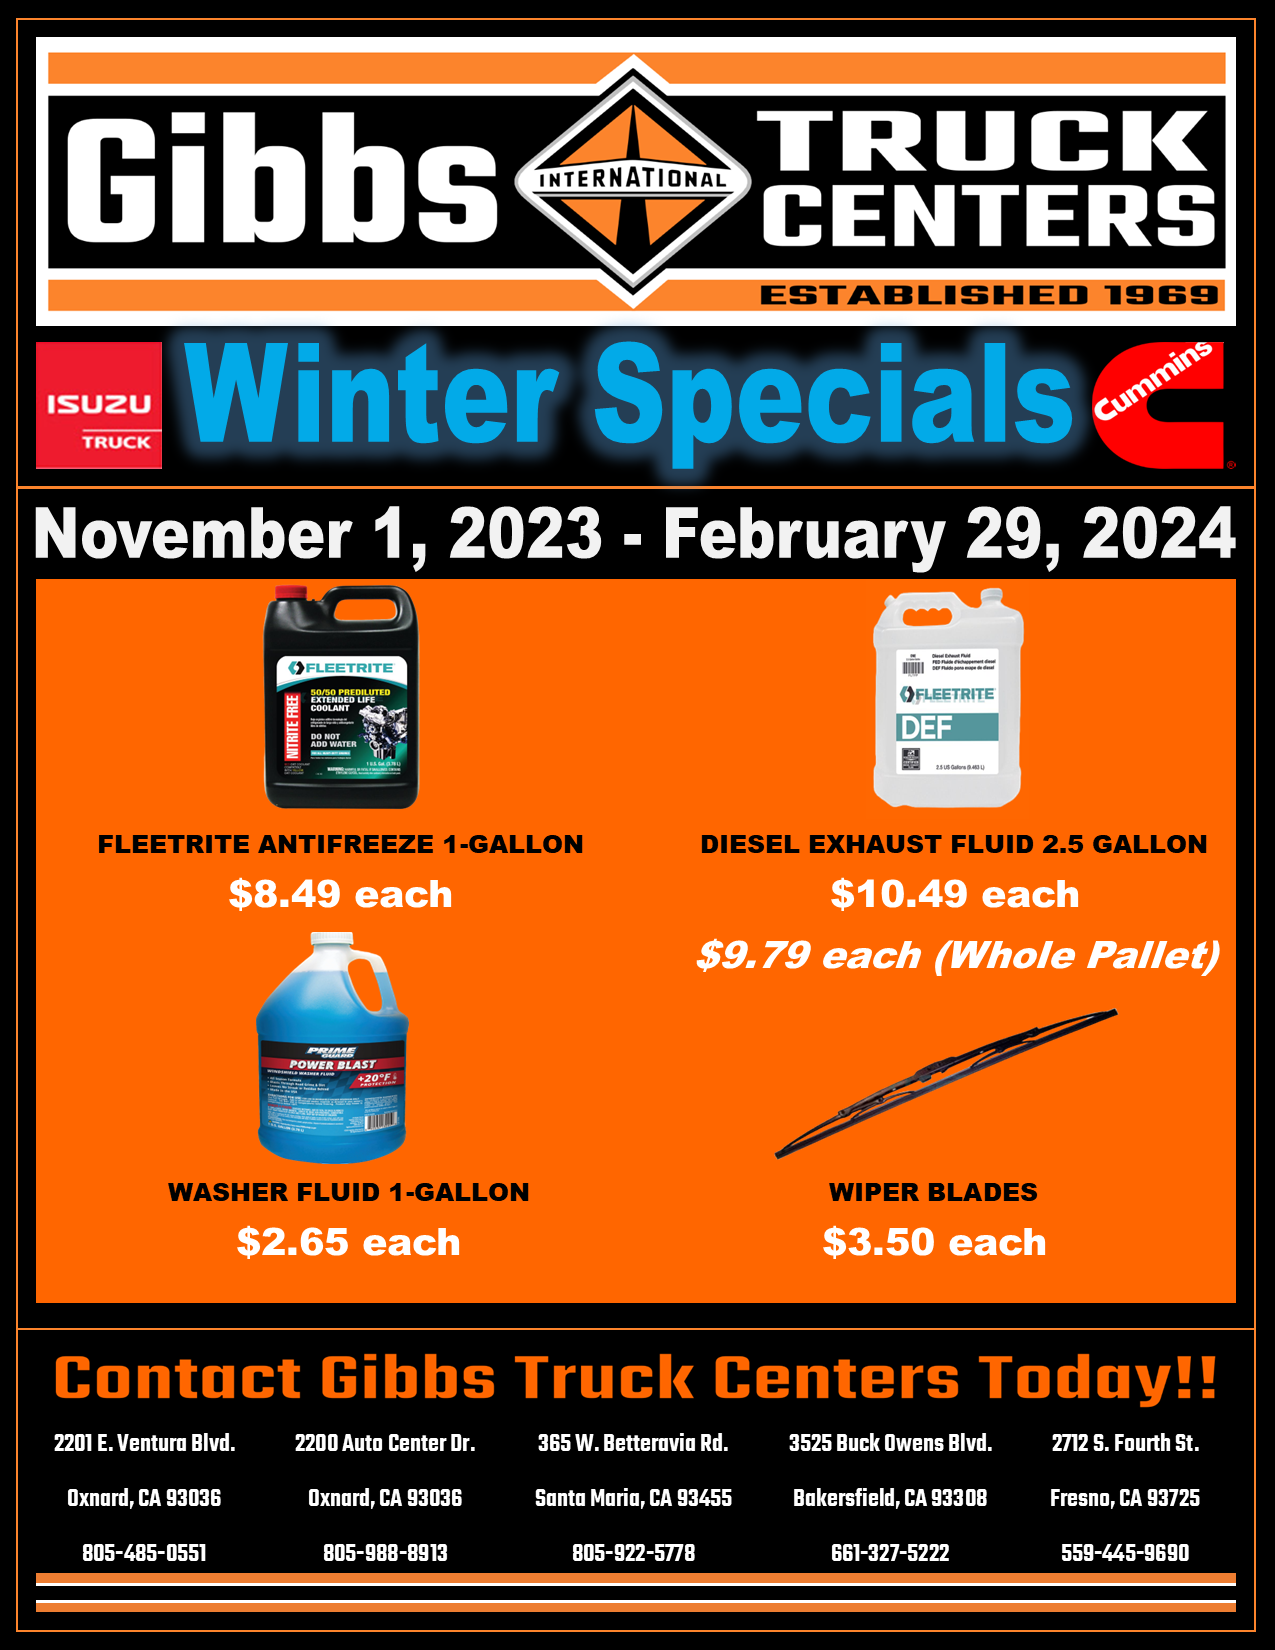 Gibbs Parts Special Flyer